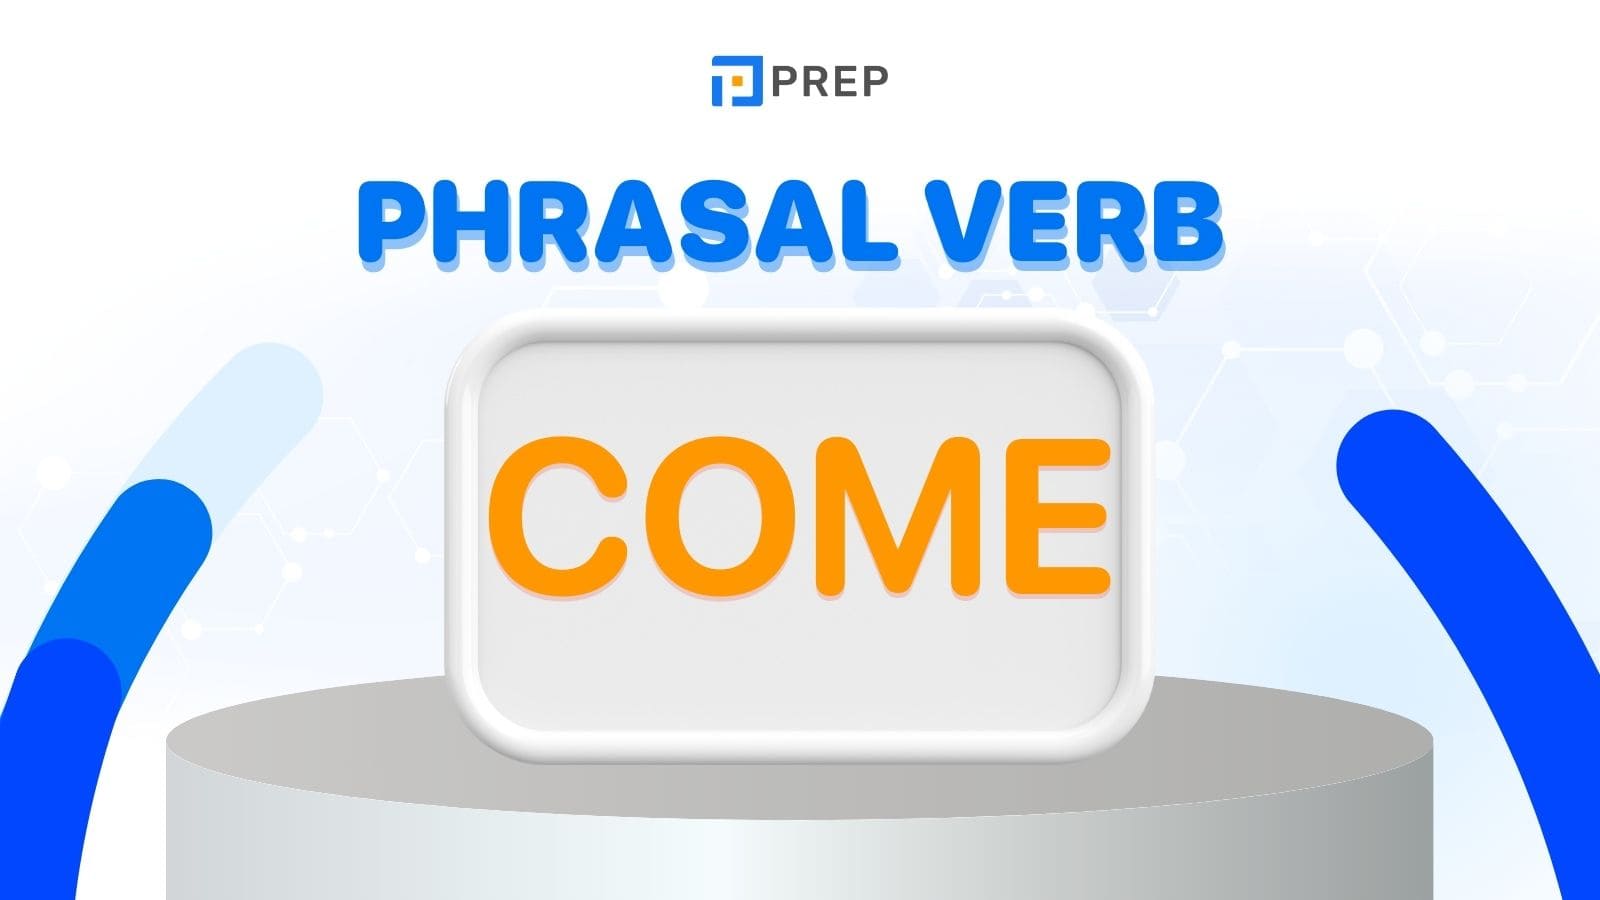 phrasal-verb-come.jpg